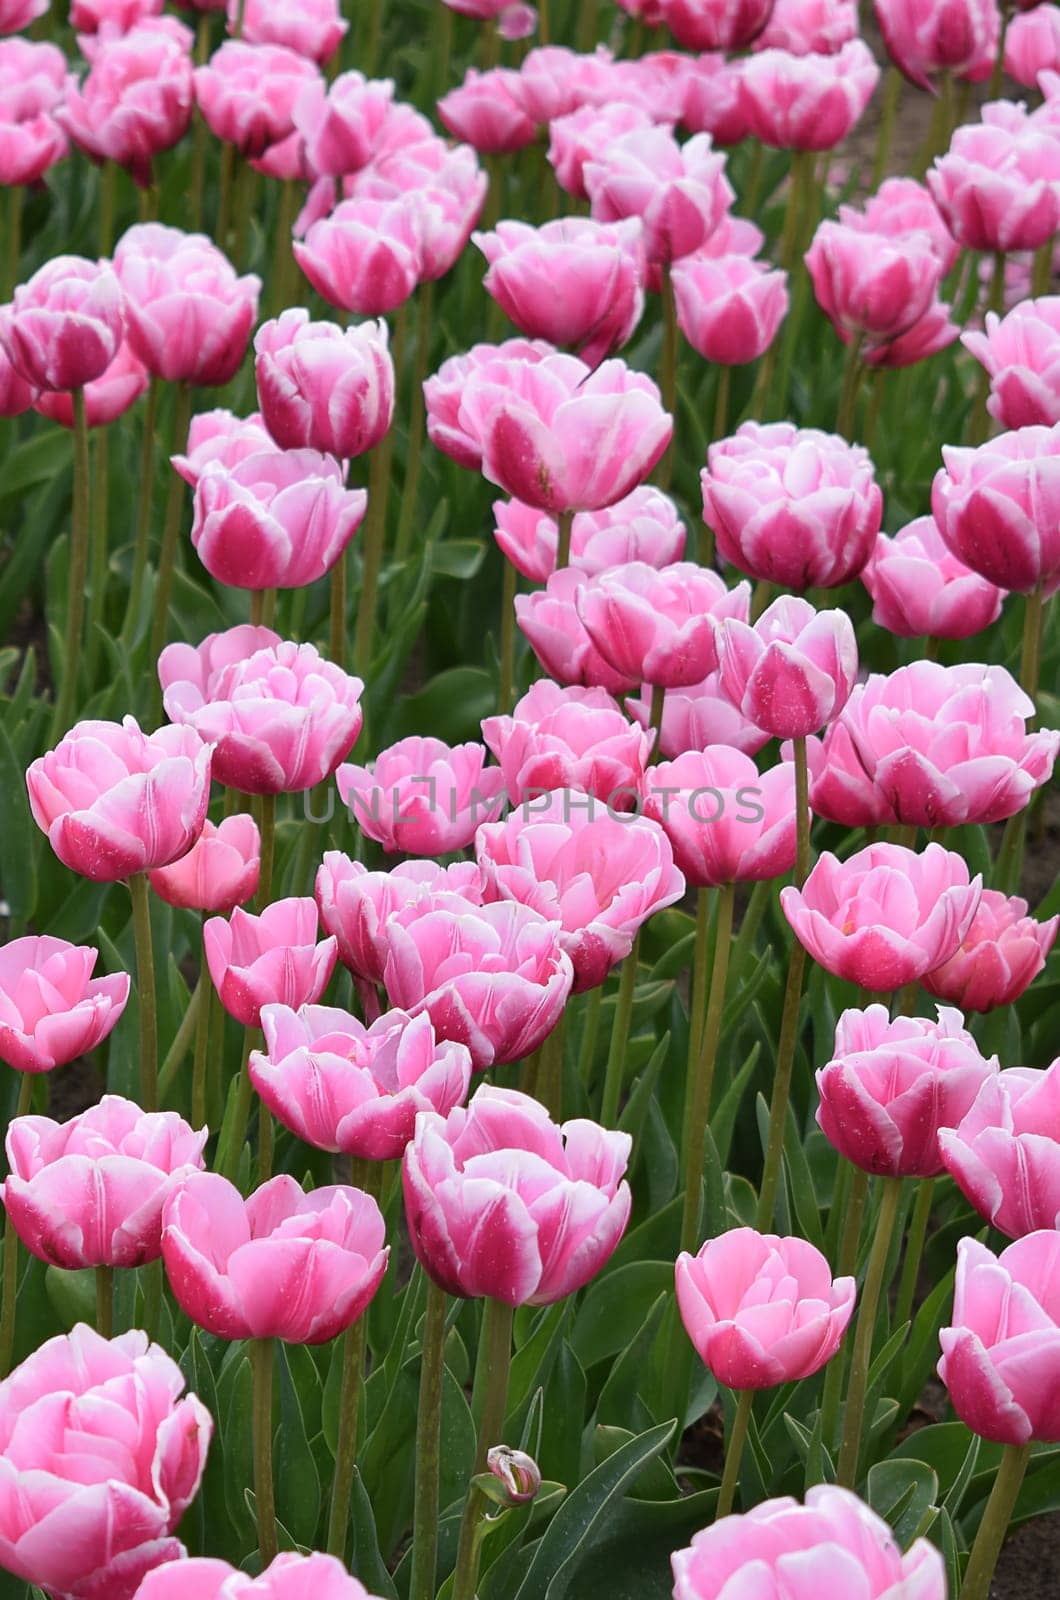 Field with beautiful pink tulips by artemisagajda